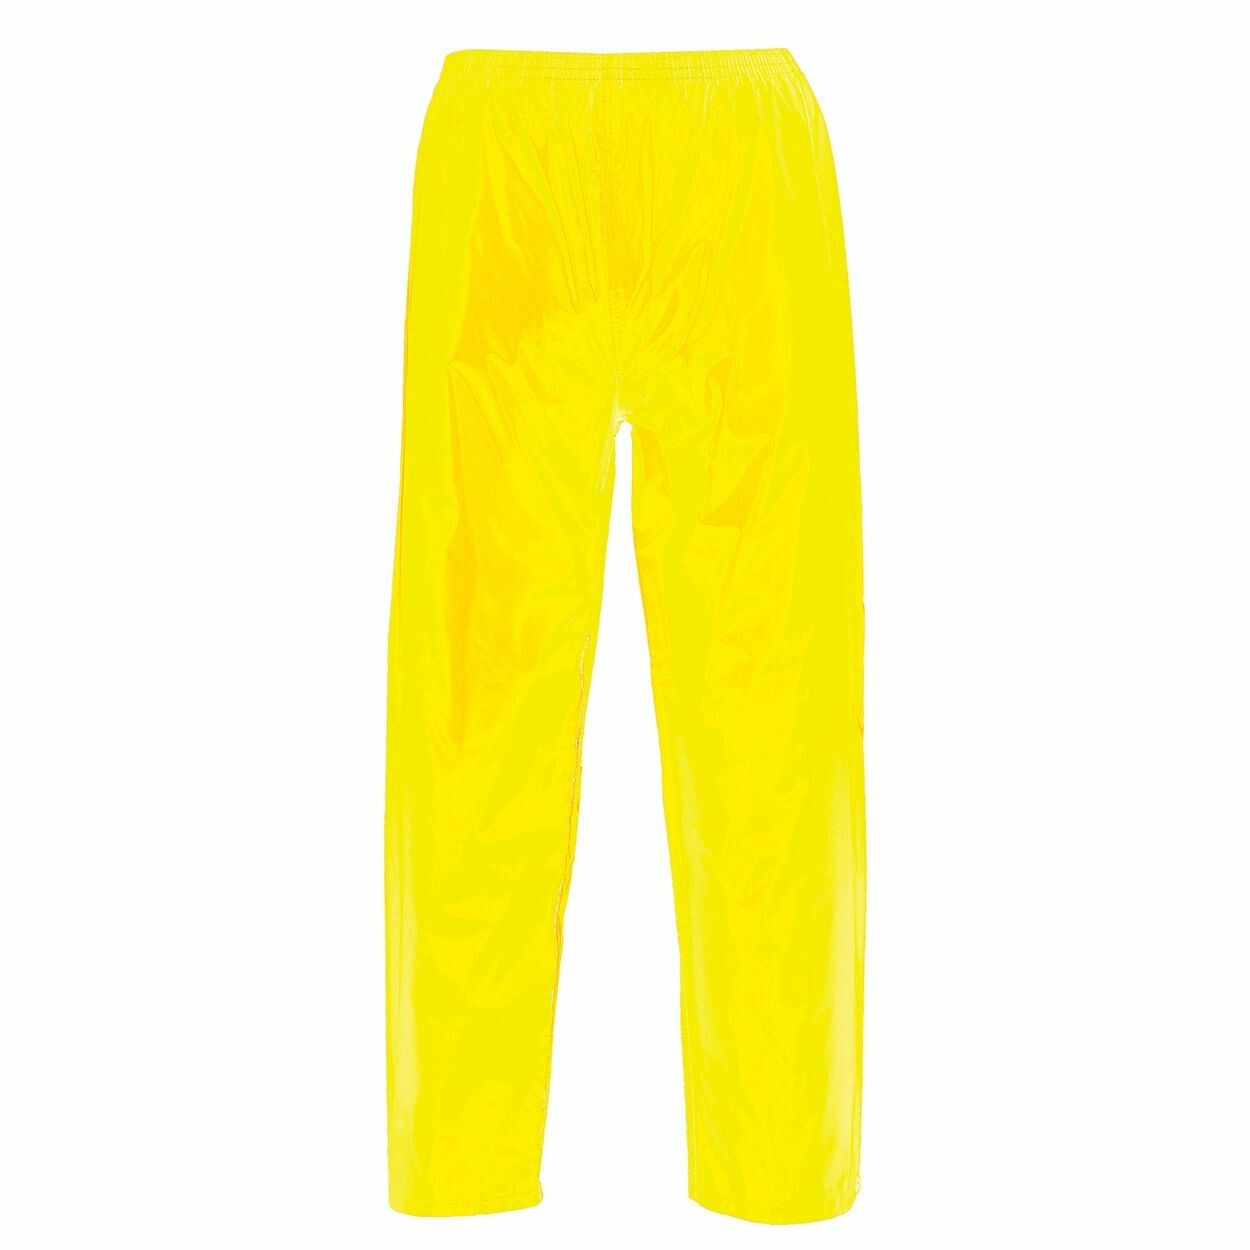 Nohavice do dažďa S441 žltá XL